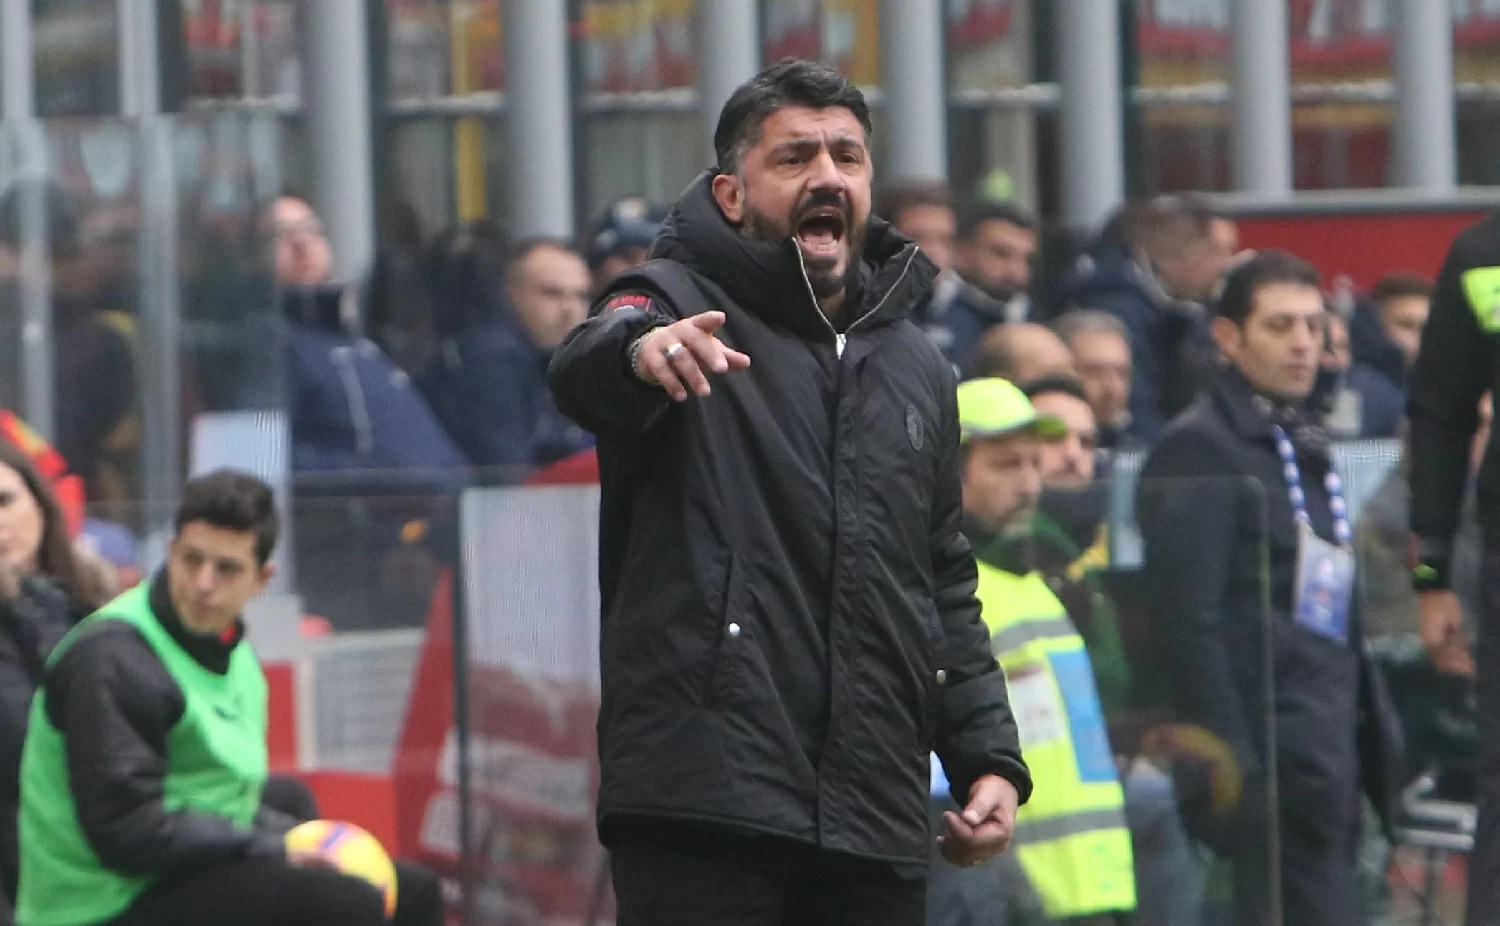 SALA STAMPA/ Gattuso: “Chiedo scusa ai tifosi. Eliminazione giusta”